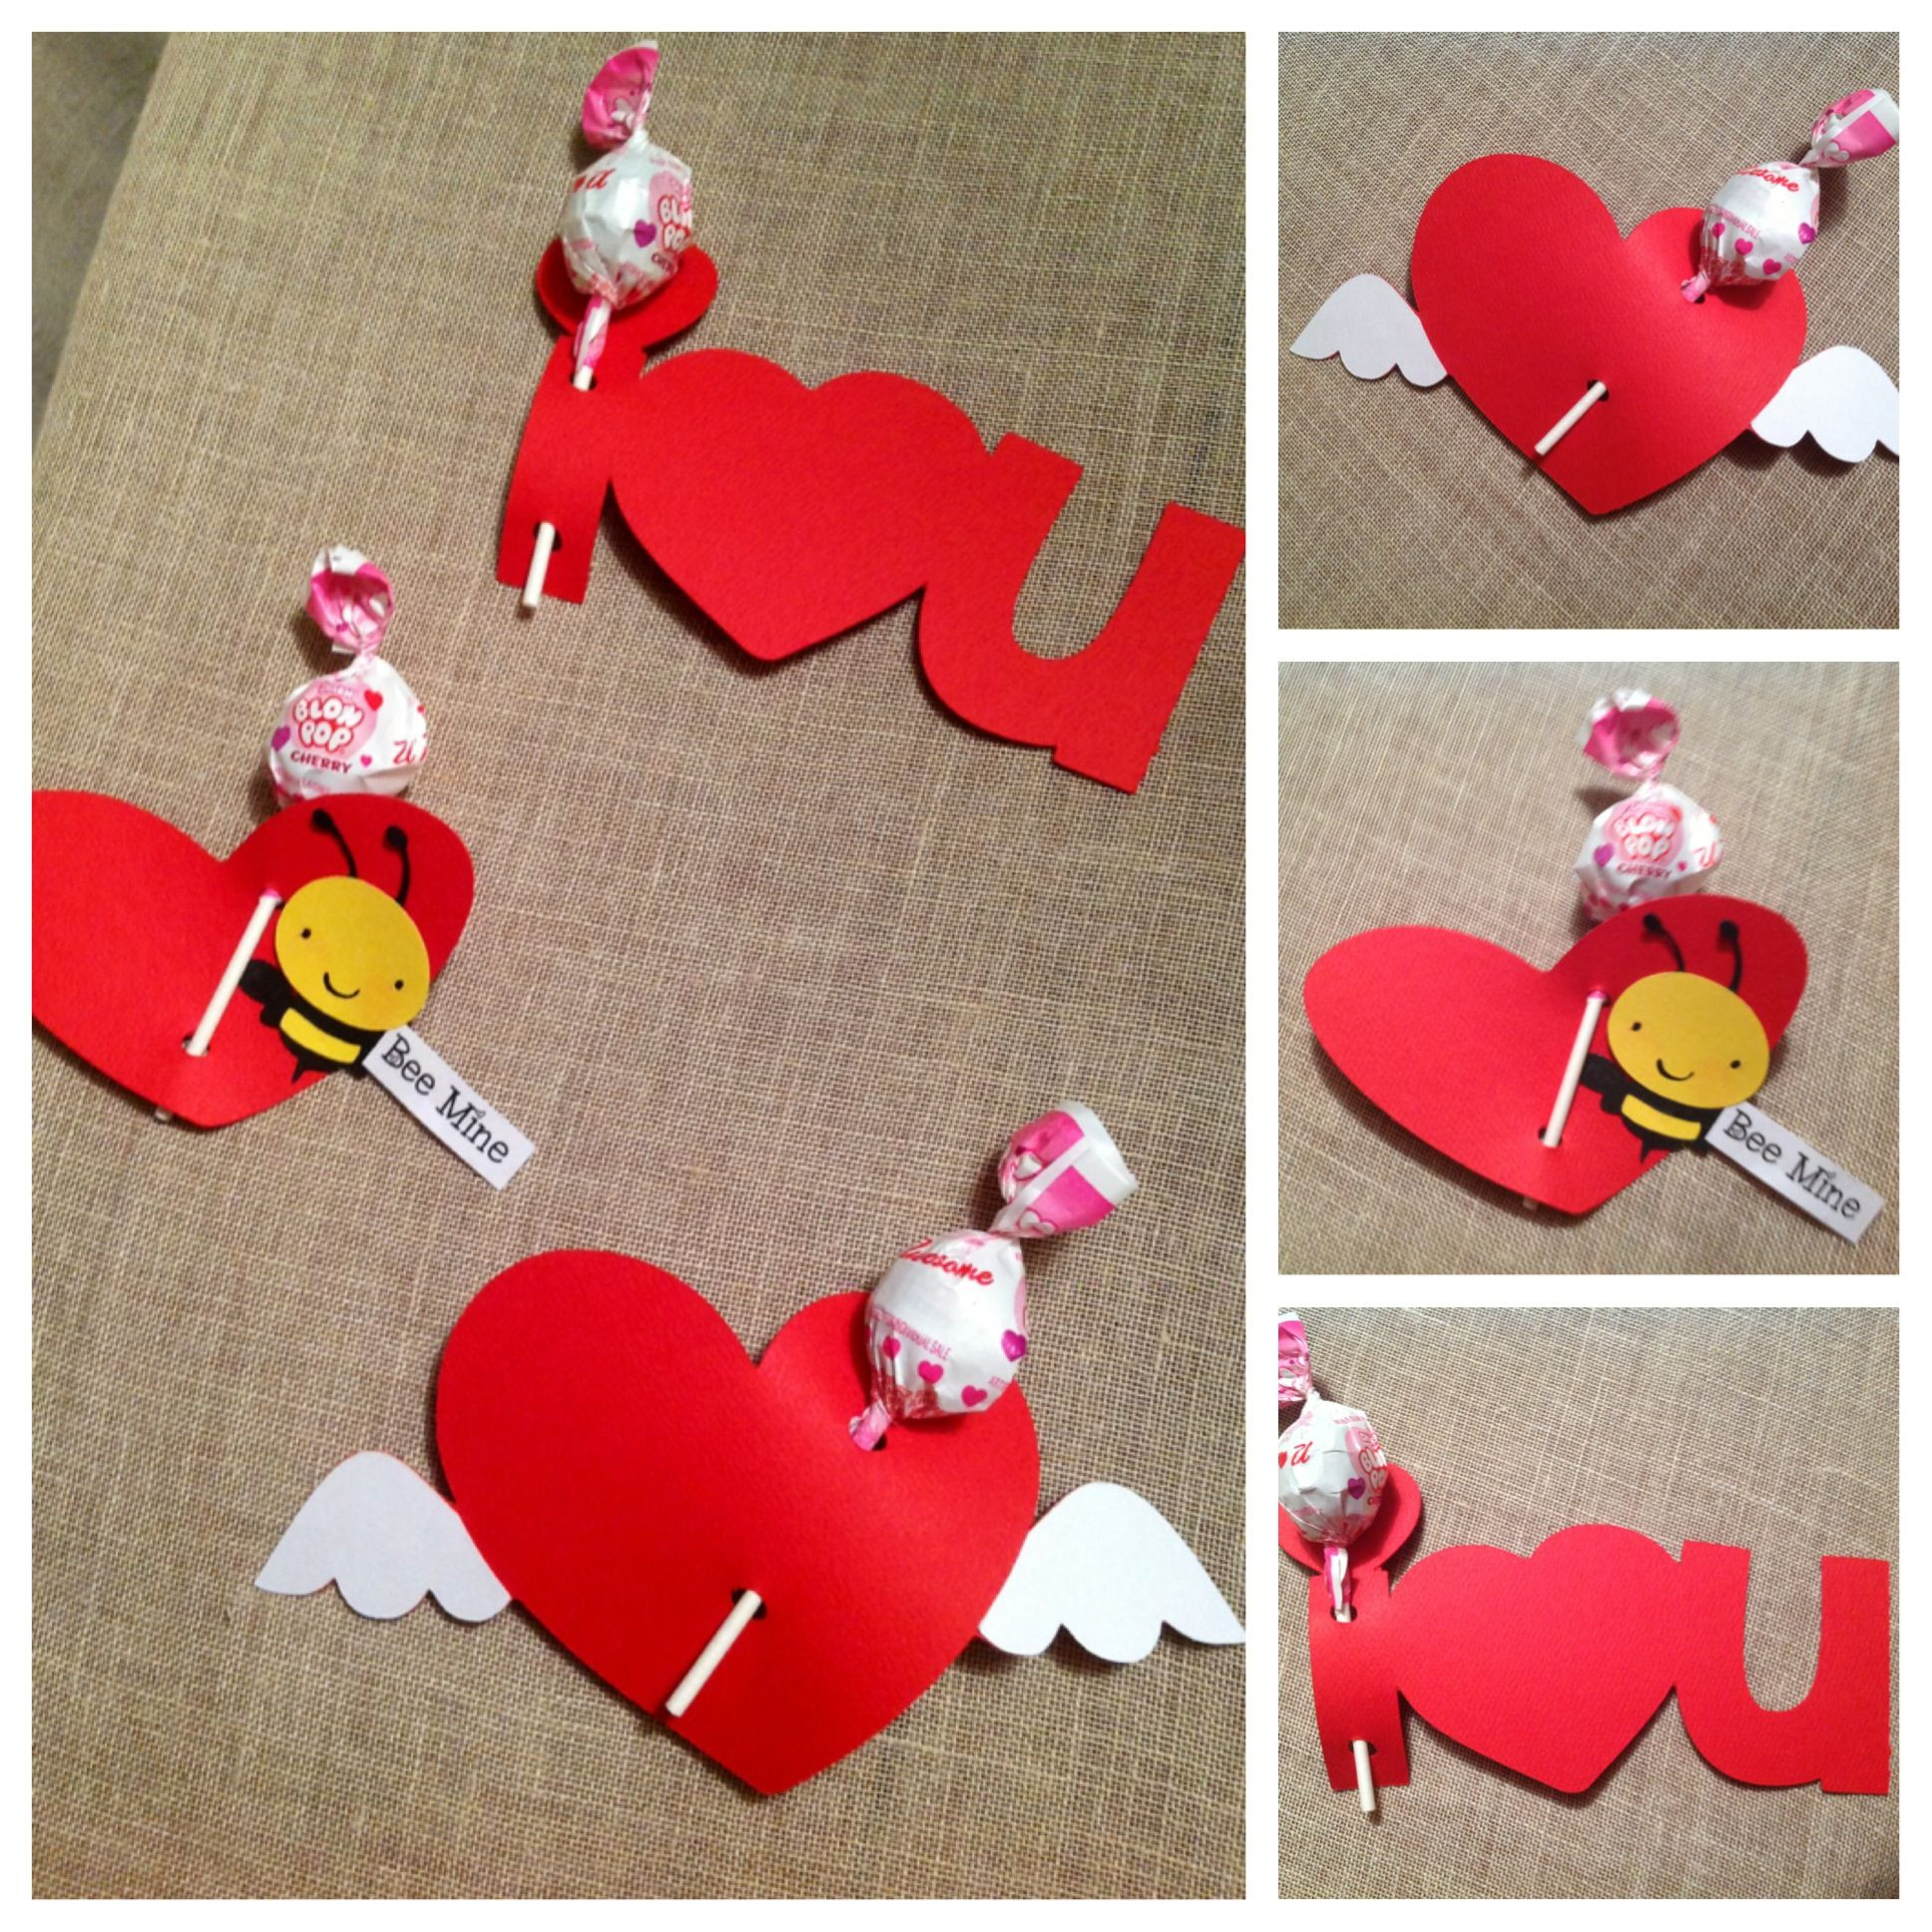 Valentines Day Candy Gram Ideas
 Candygram Fundraiser Cute idea Valentine s Day diy